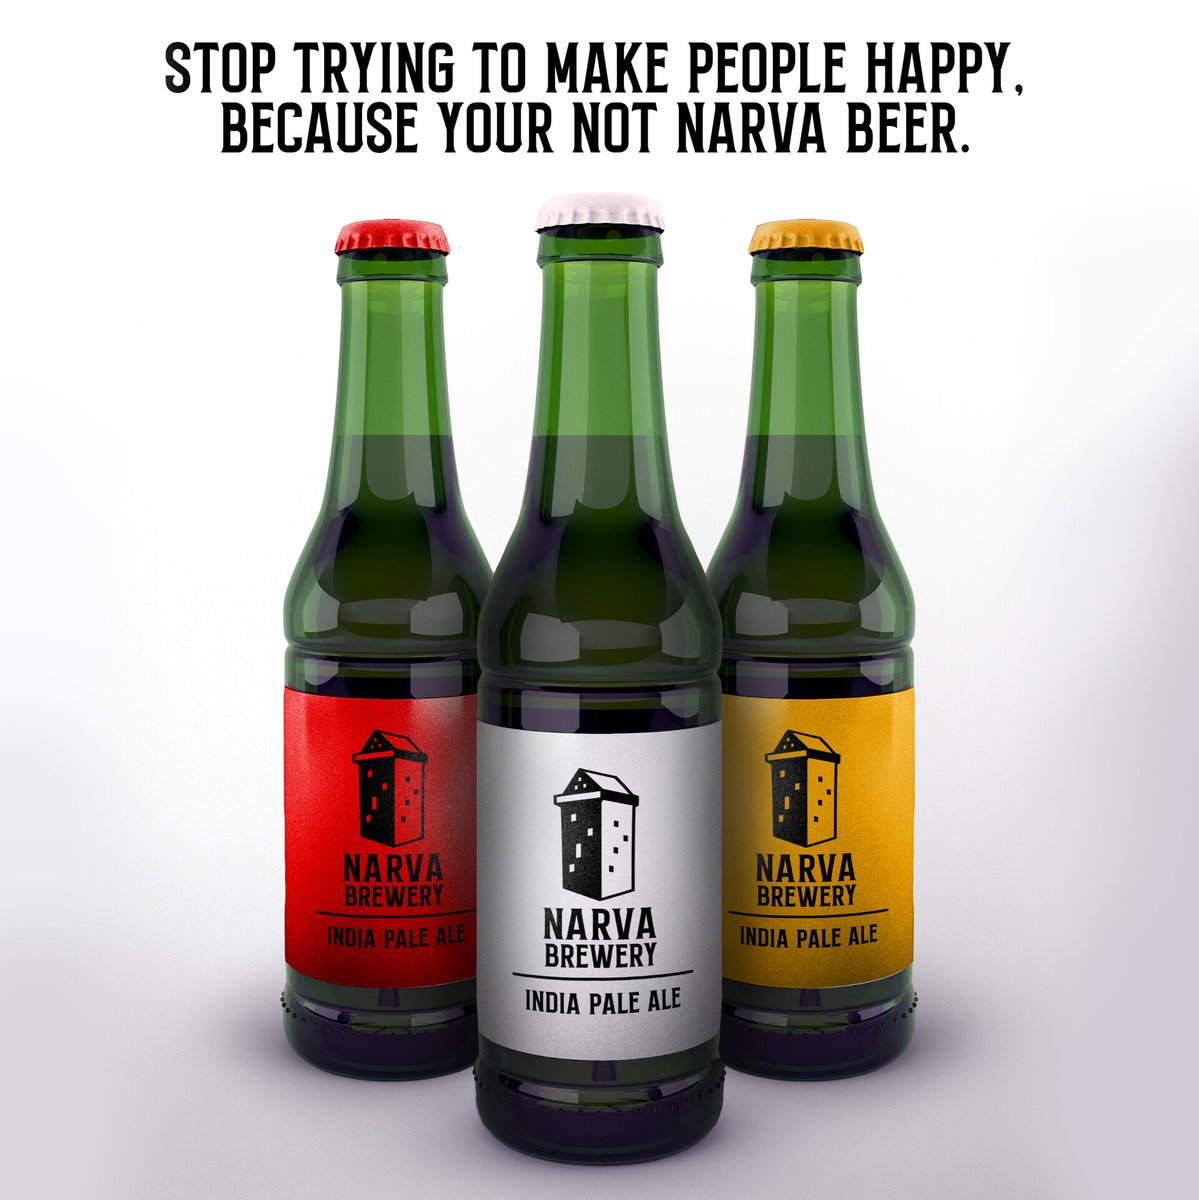 Narva Beer (fake)

Made a fake ad and logo. I got the idea from being a former volunteer in Narva

#narva #esti #estonia #estonia🇪🇪 #designinspiration #designers #designinspo #designeveryday #designergraphic #designer #design #graphic #graphicdesign #graphiceart #graphicart